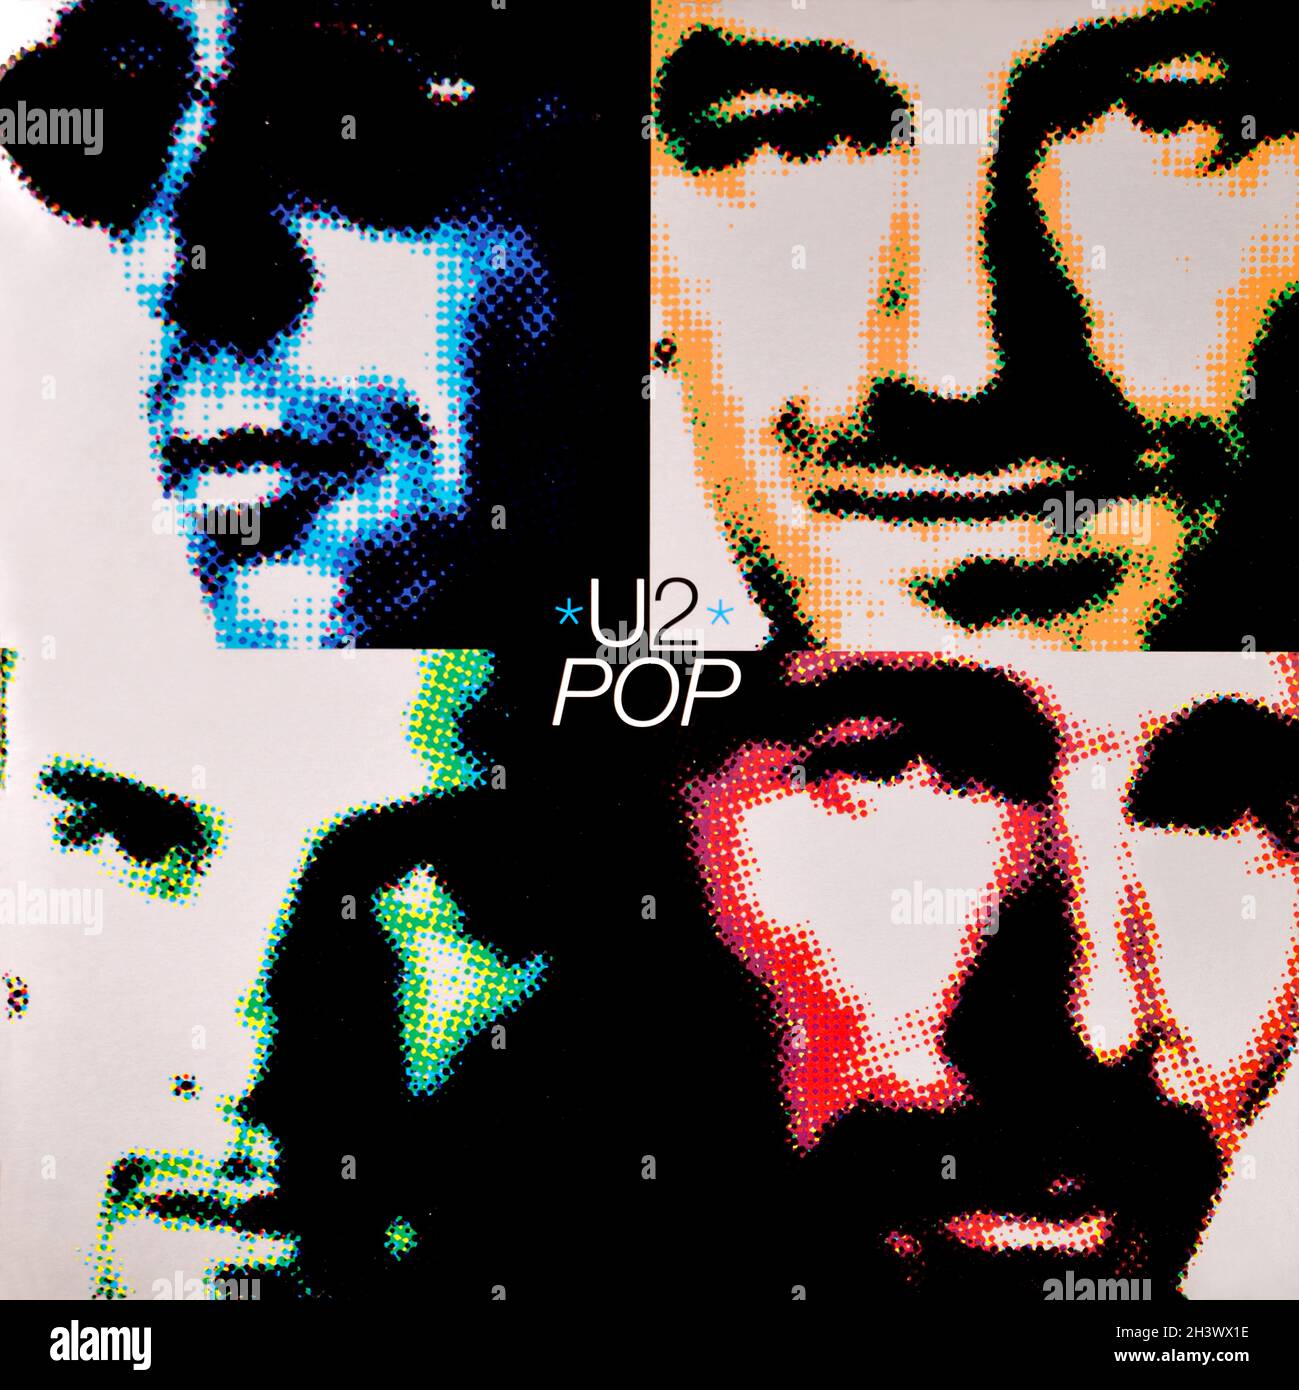 U2 - original Vinyl Album Cover - Pop - 1997 Stockfoto